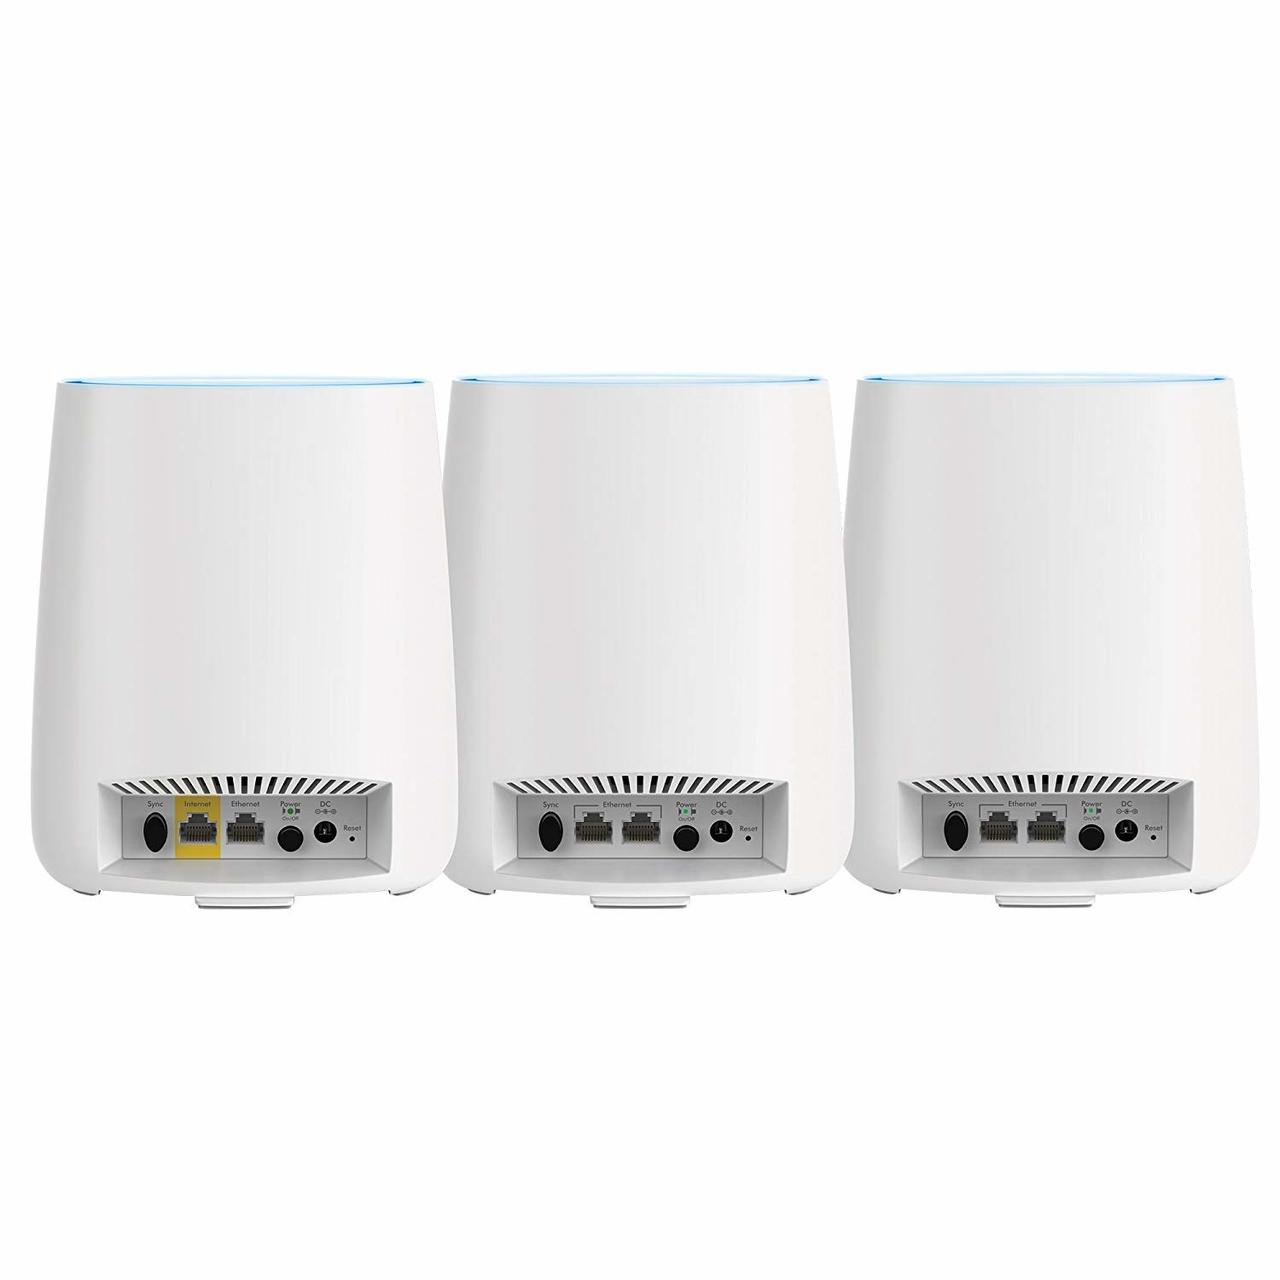 Netgear RBK53S-100NAS Orbi AC3000 Whole Home Tri-band WiFi System